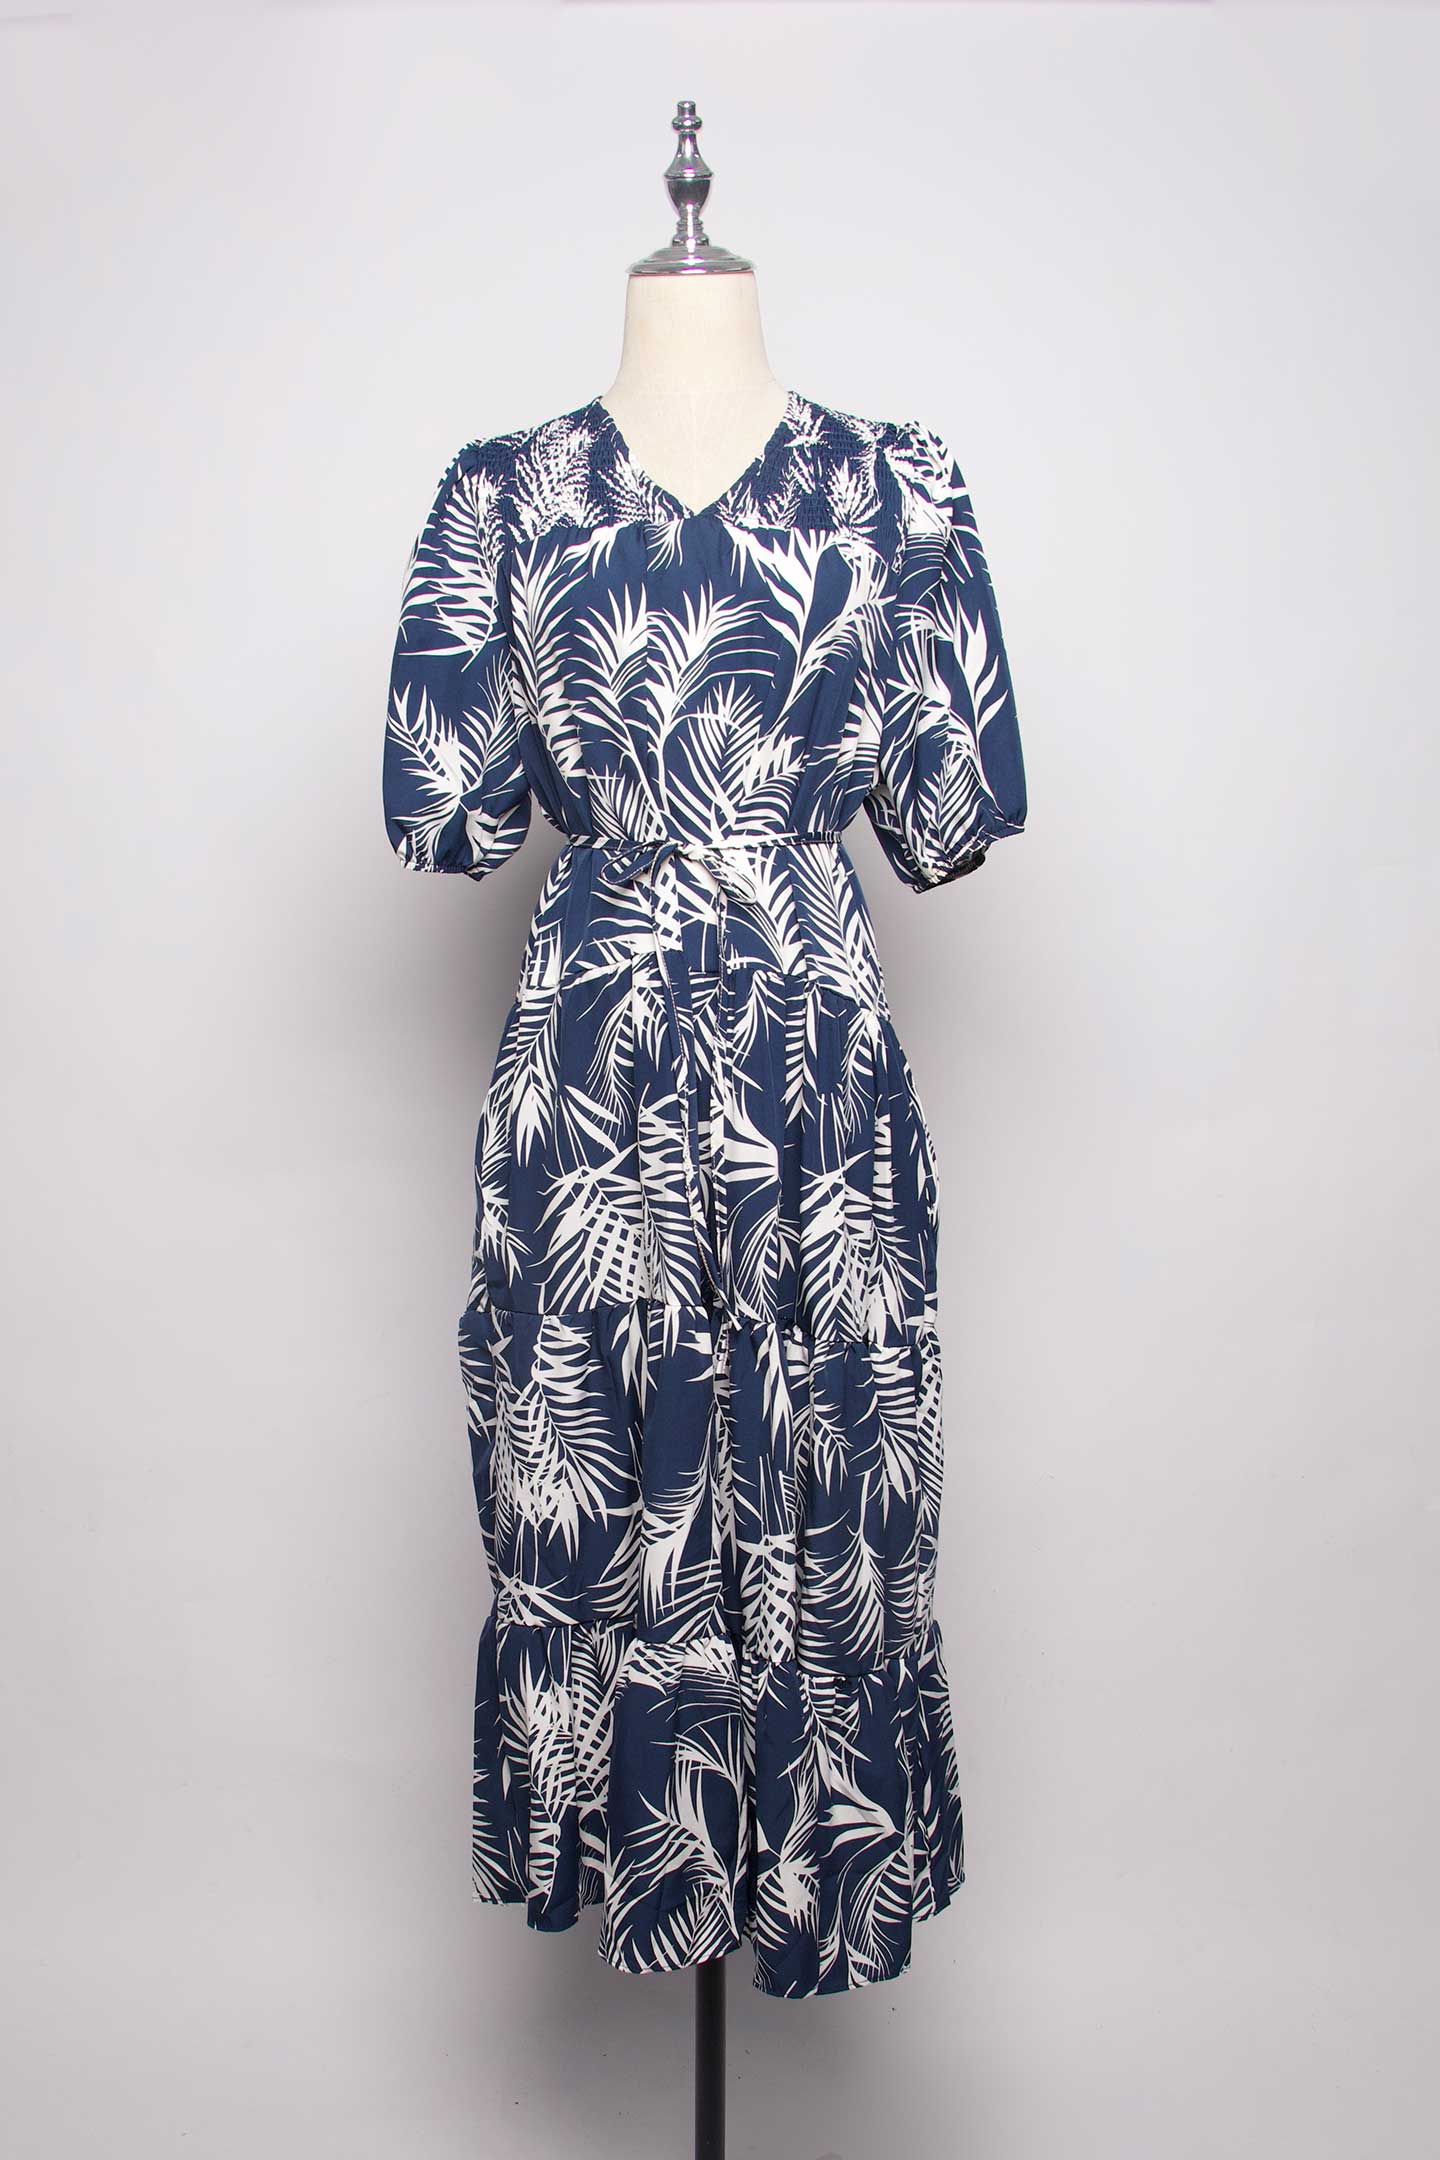 PO - Sydney Dress in Blue Hawaii